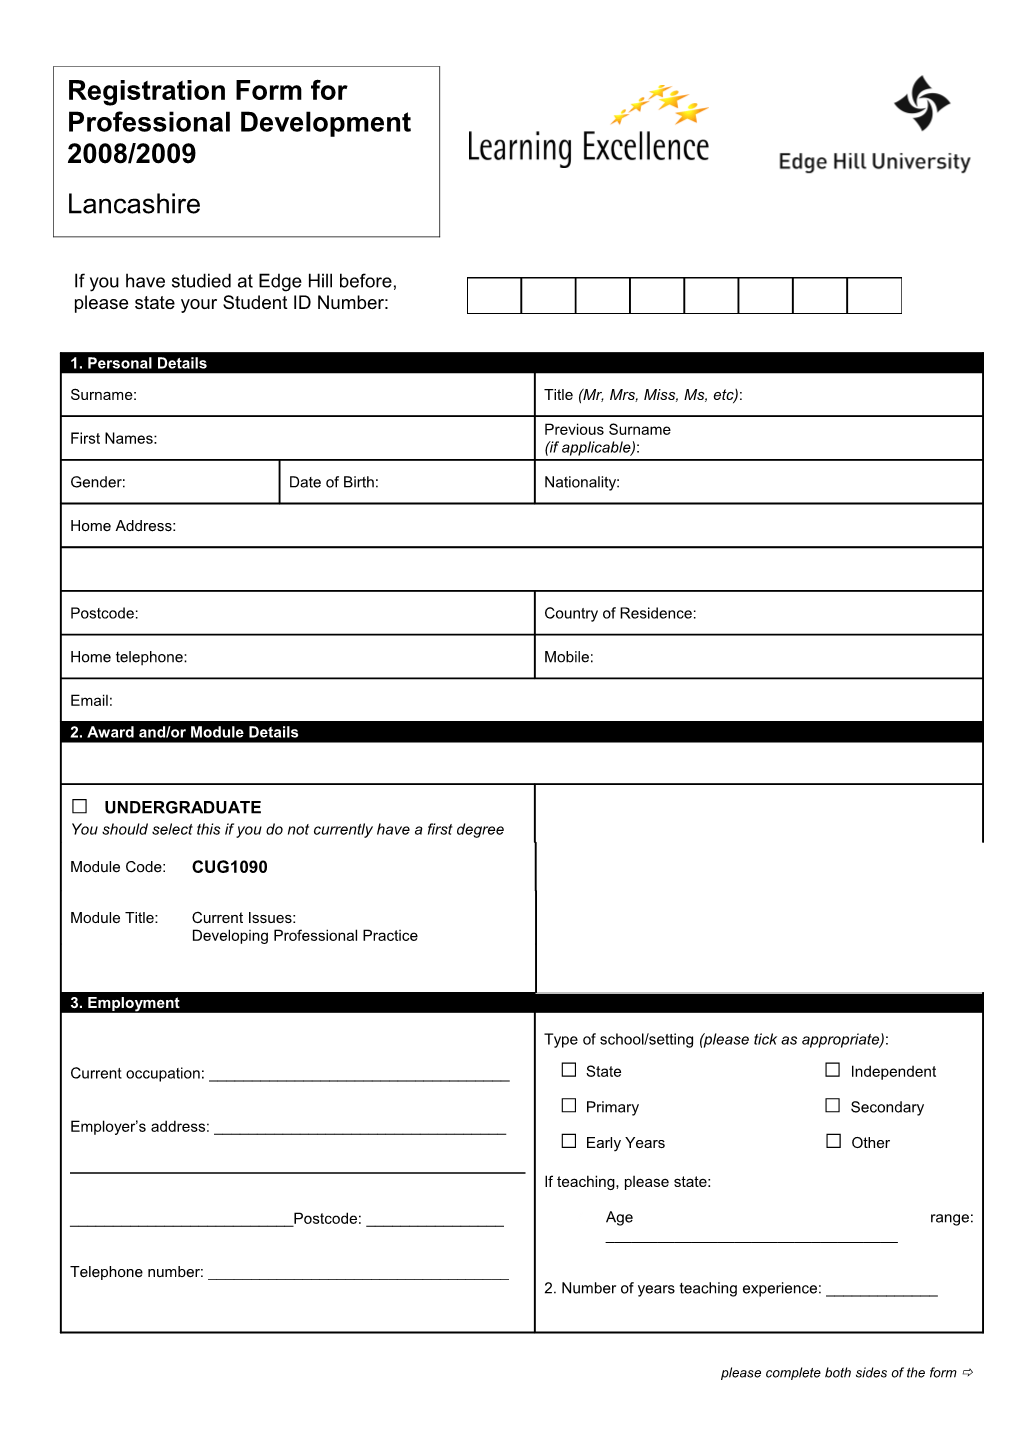 Nurture Group PD Registration Form